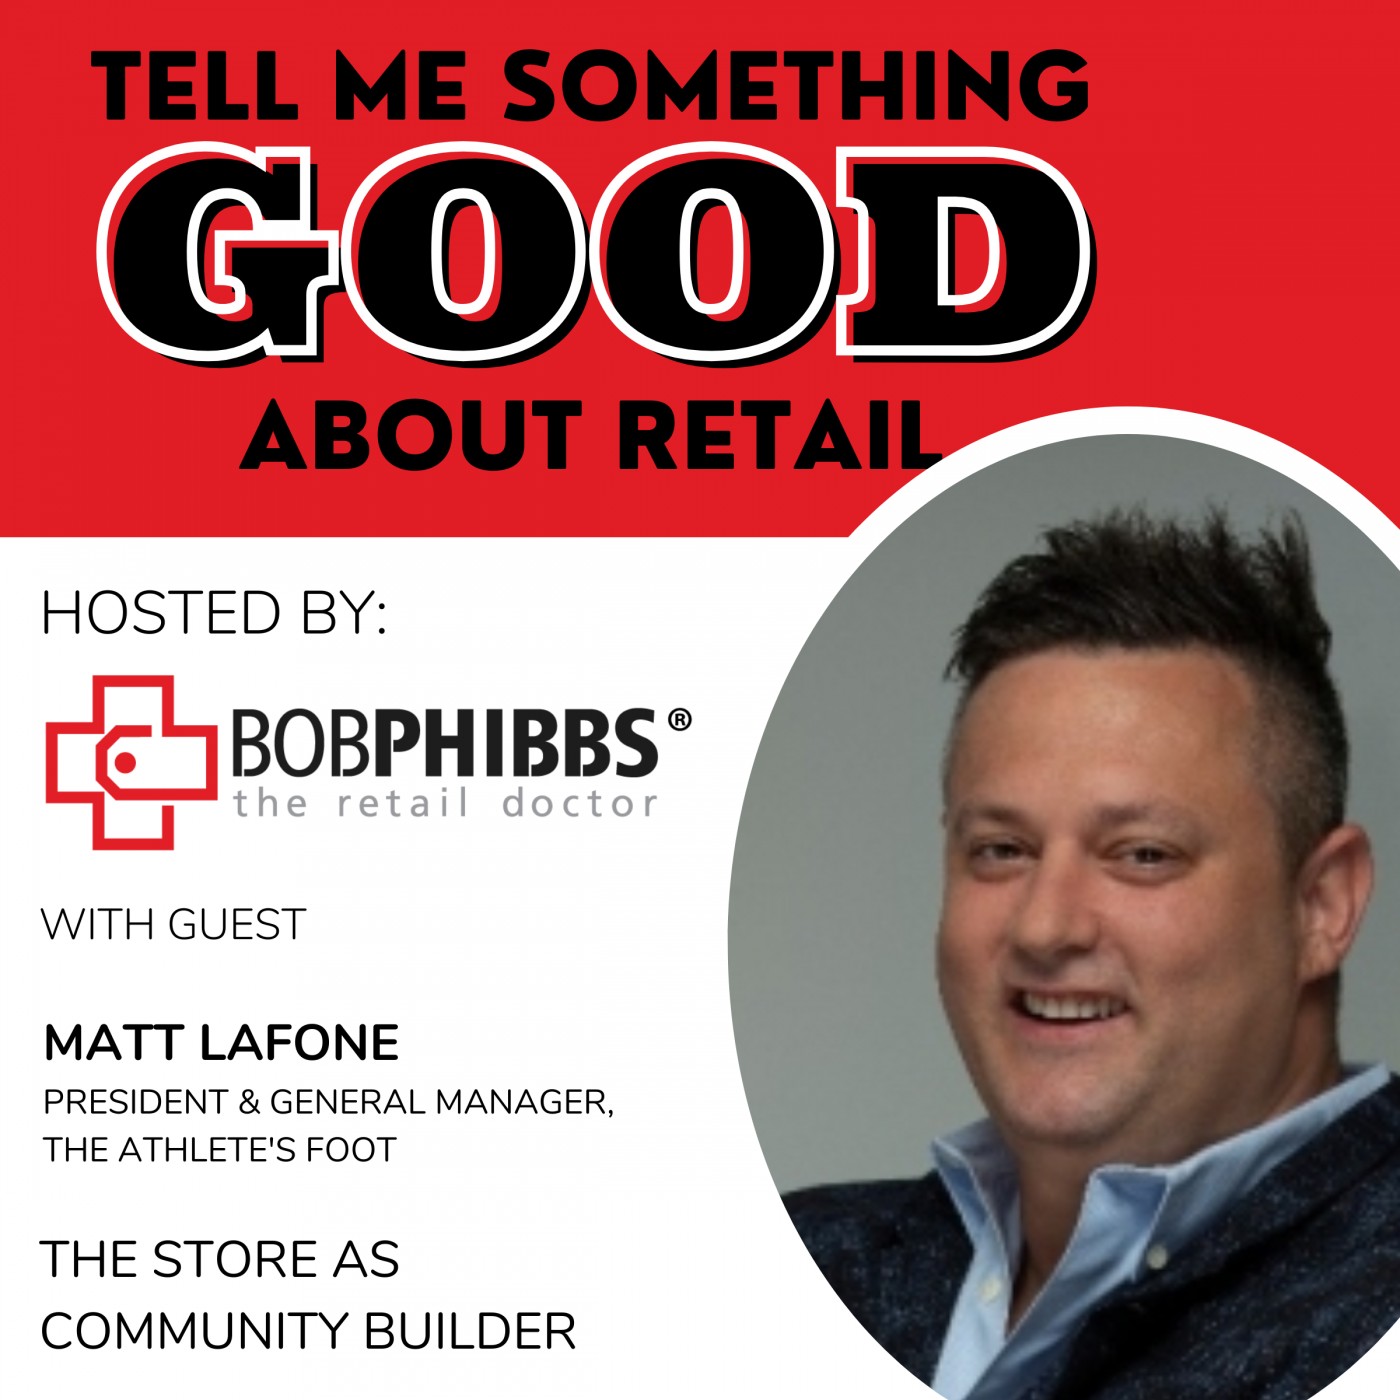 Matt Lafone: The Store As Community Builder